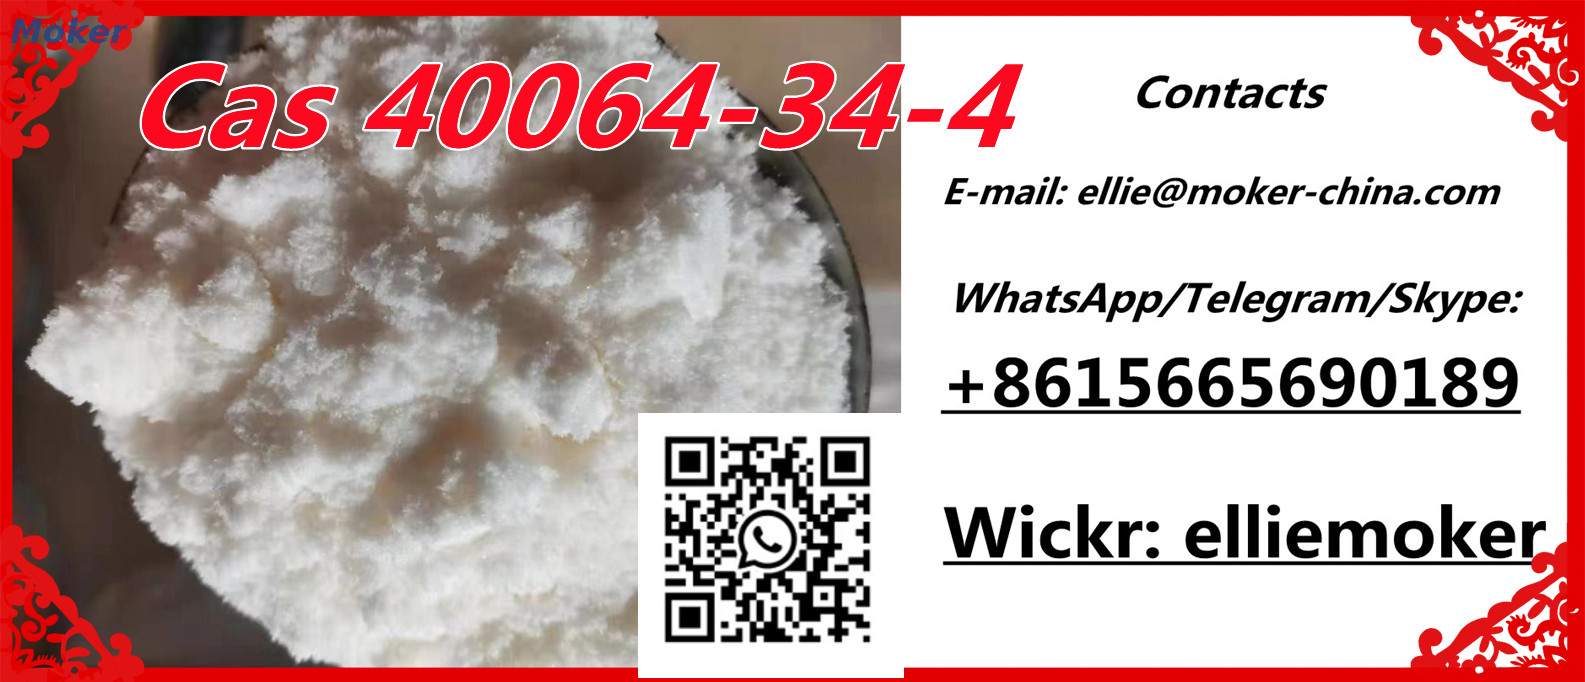  Buy CAS 40064-34-4 4 4-Piperidinediol Hydrochloride